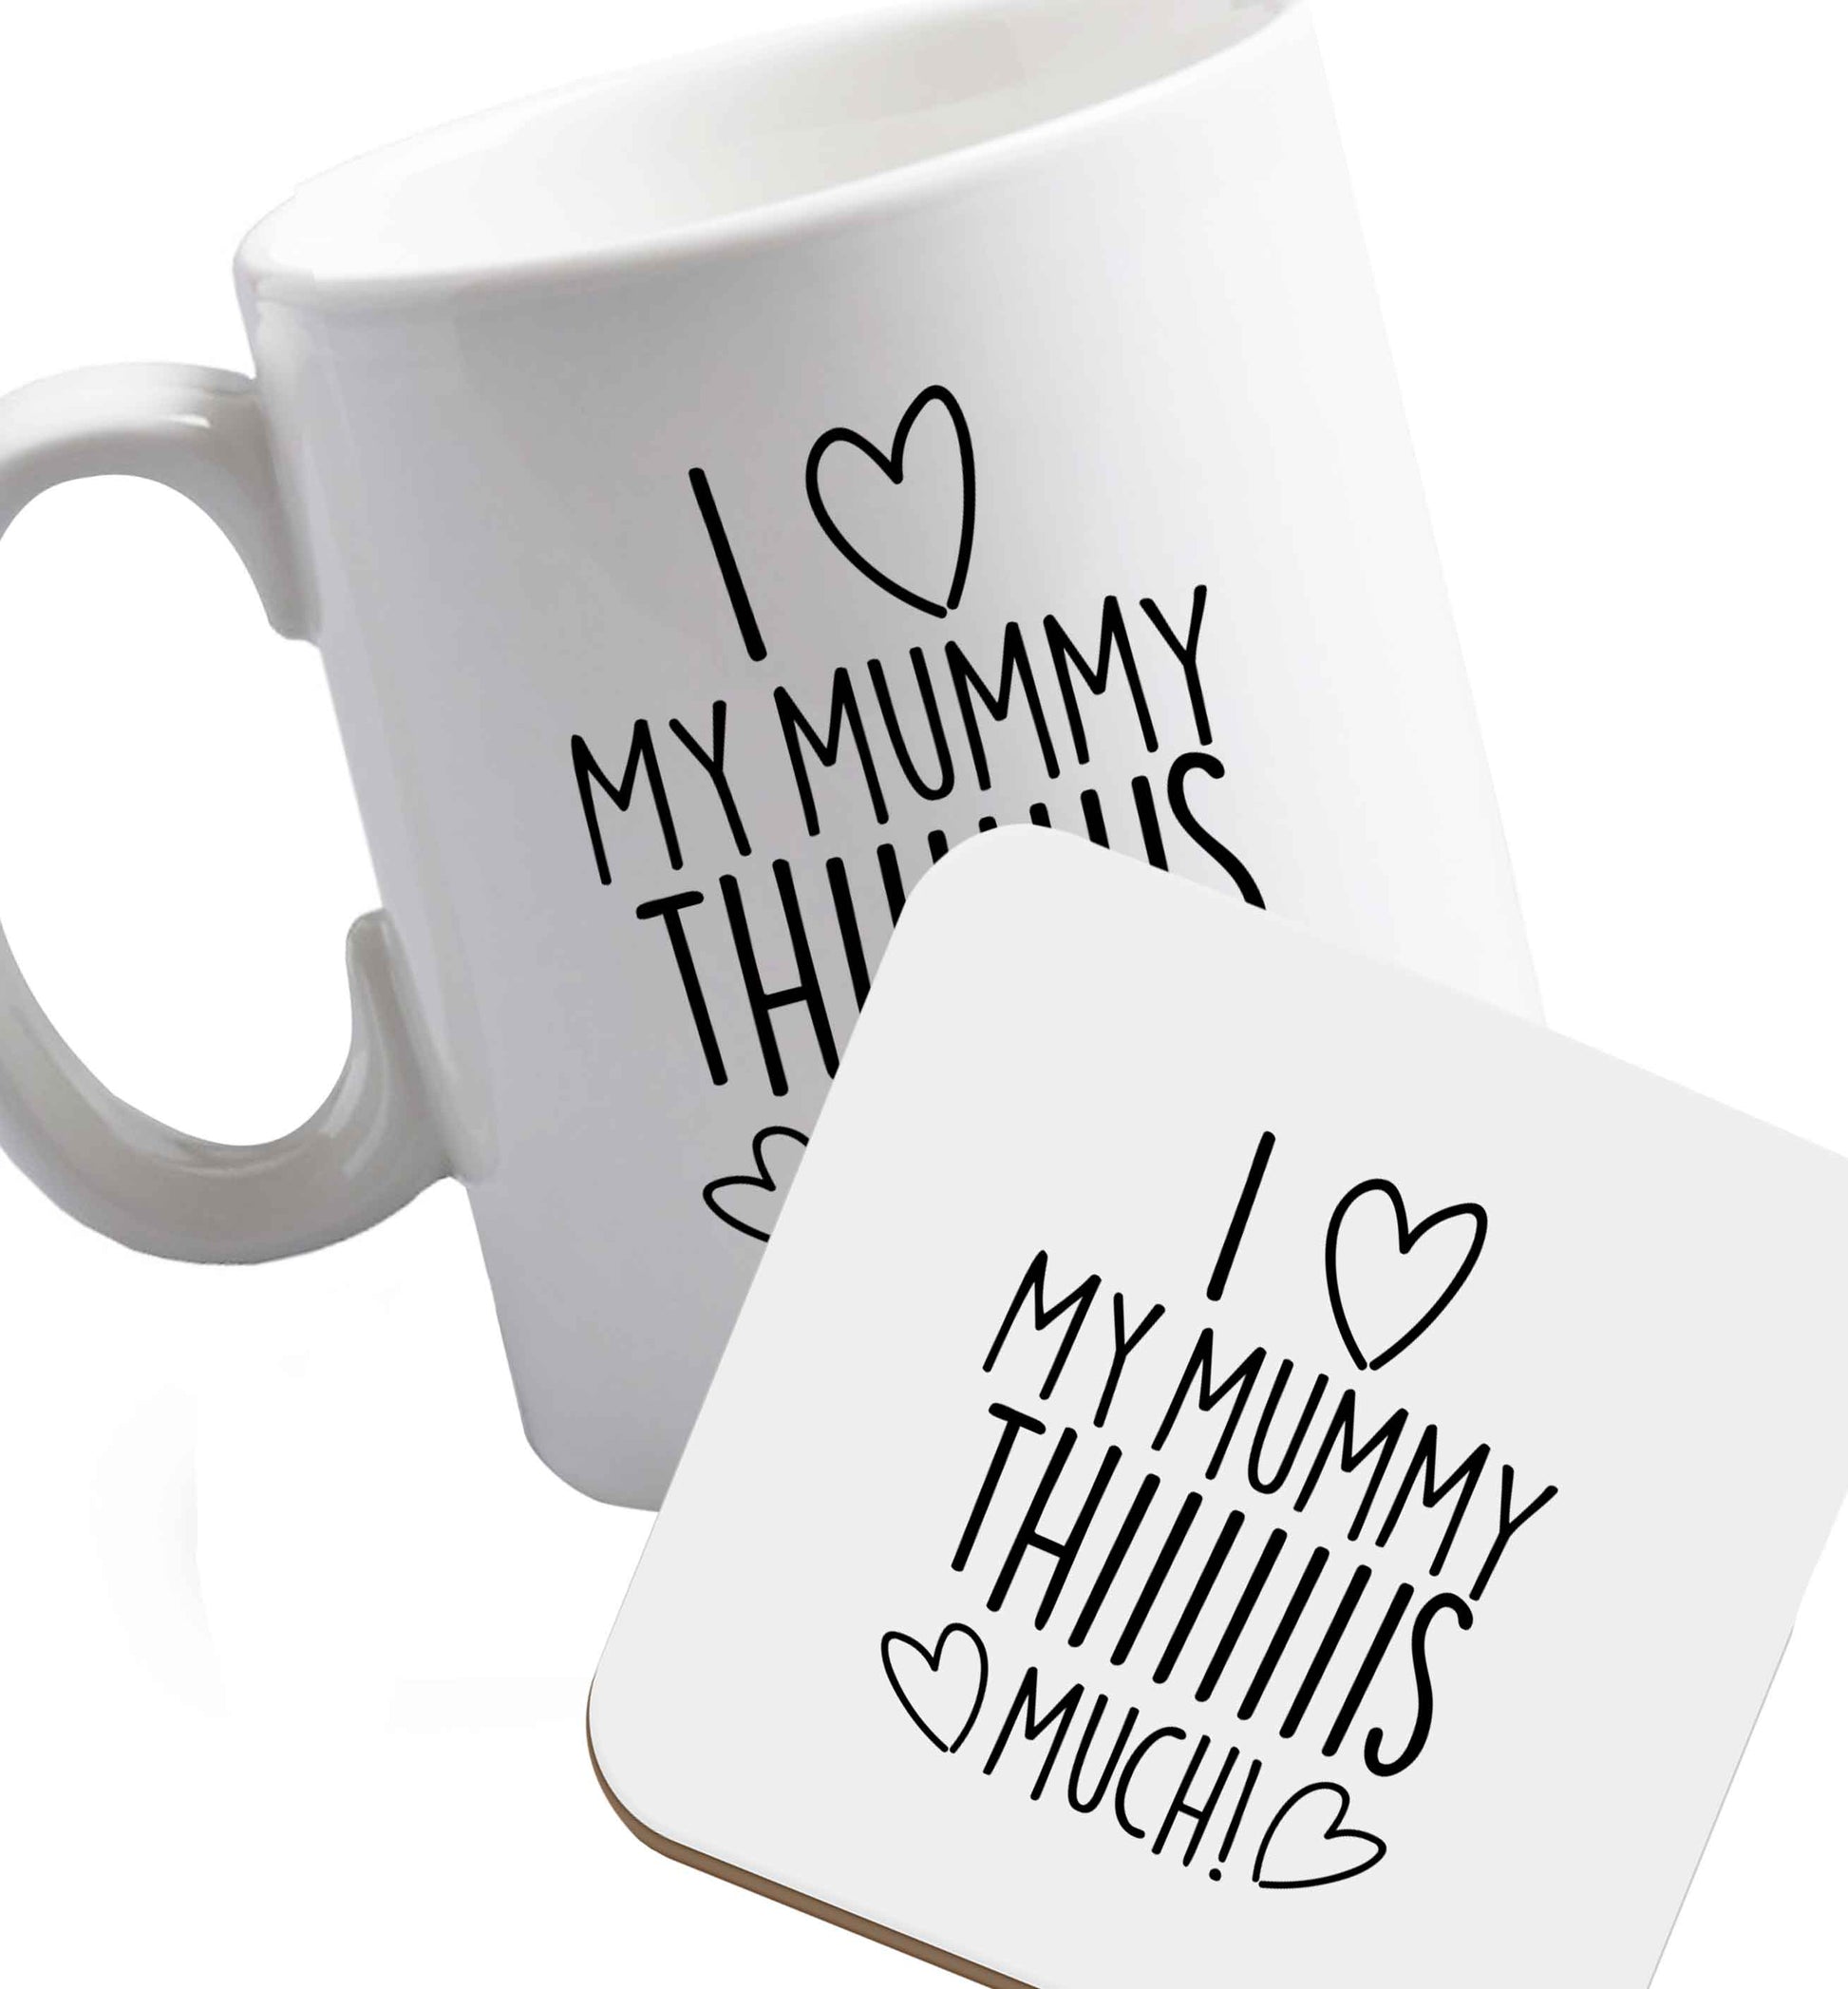 10 oz I love my mummy thiiiiis much! ceramic mug and coaster set right handed